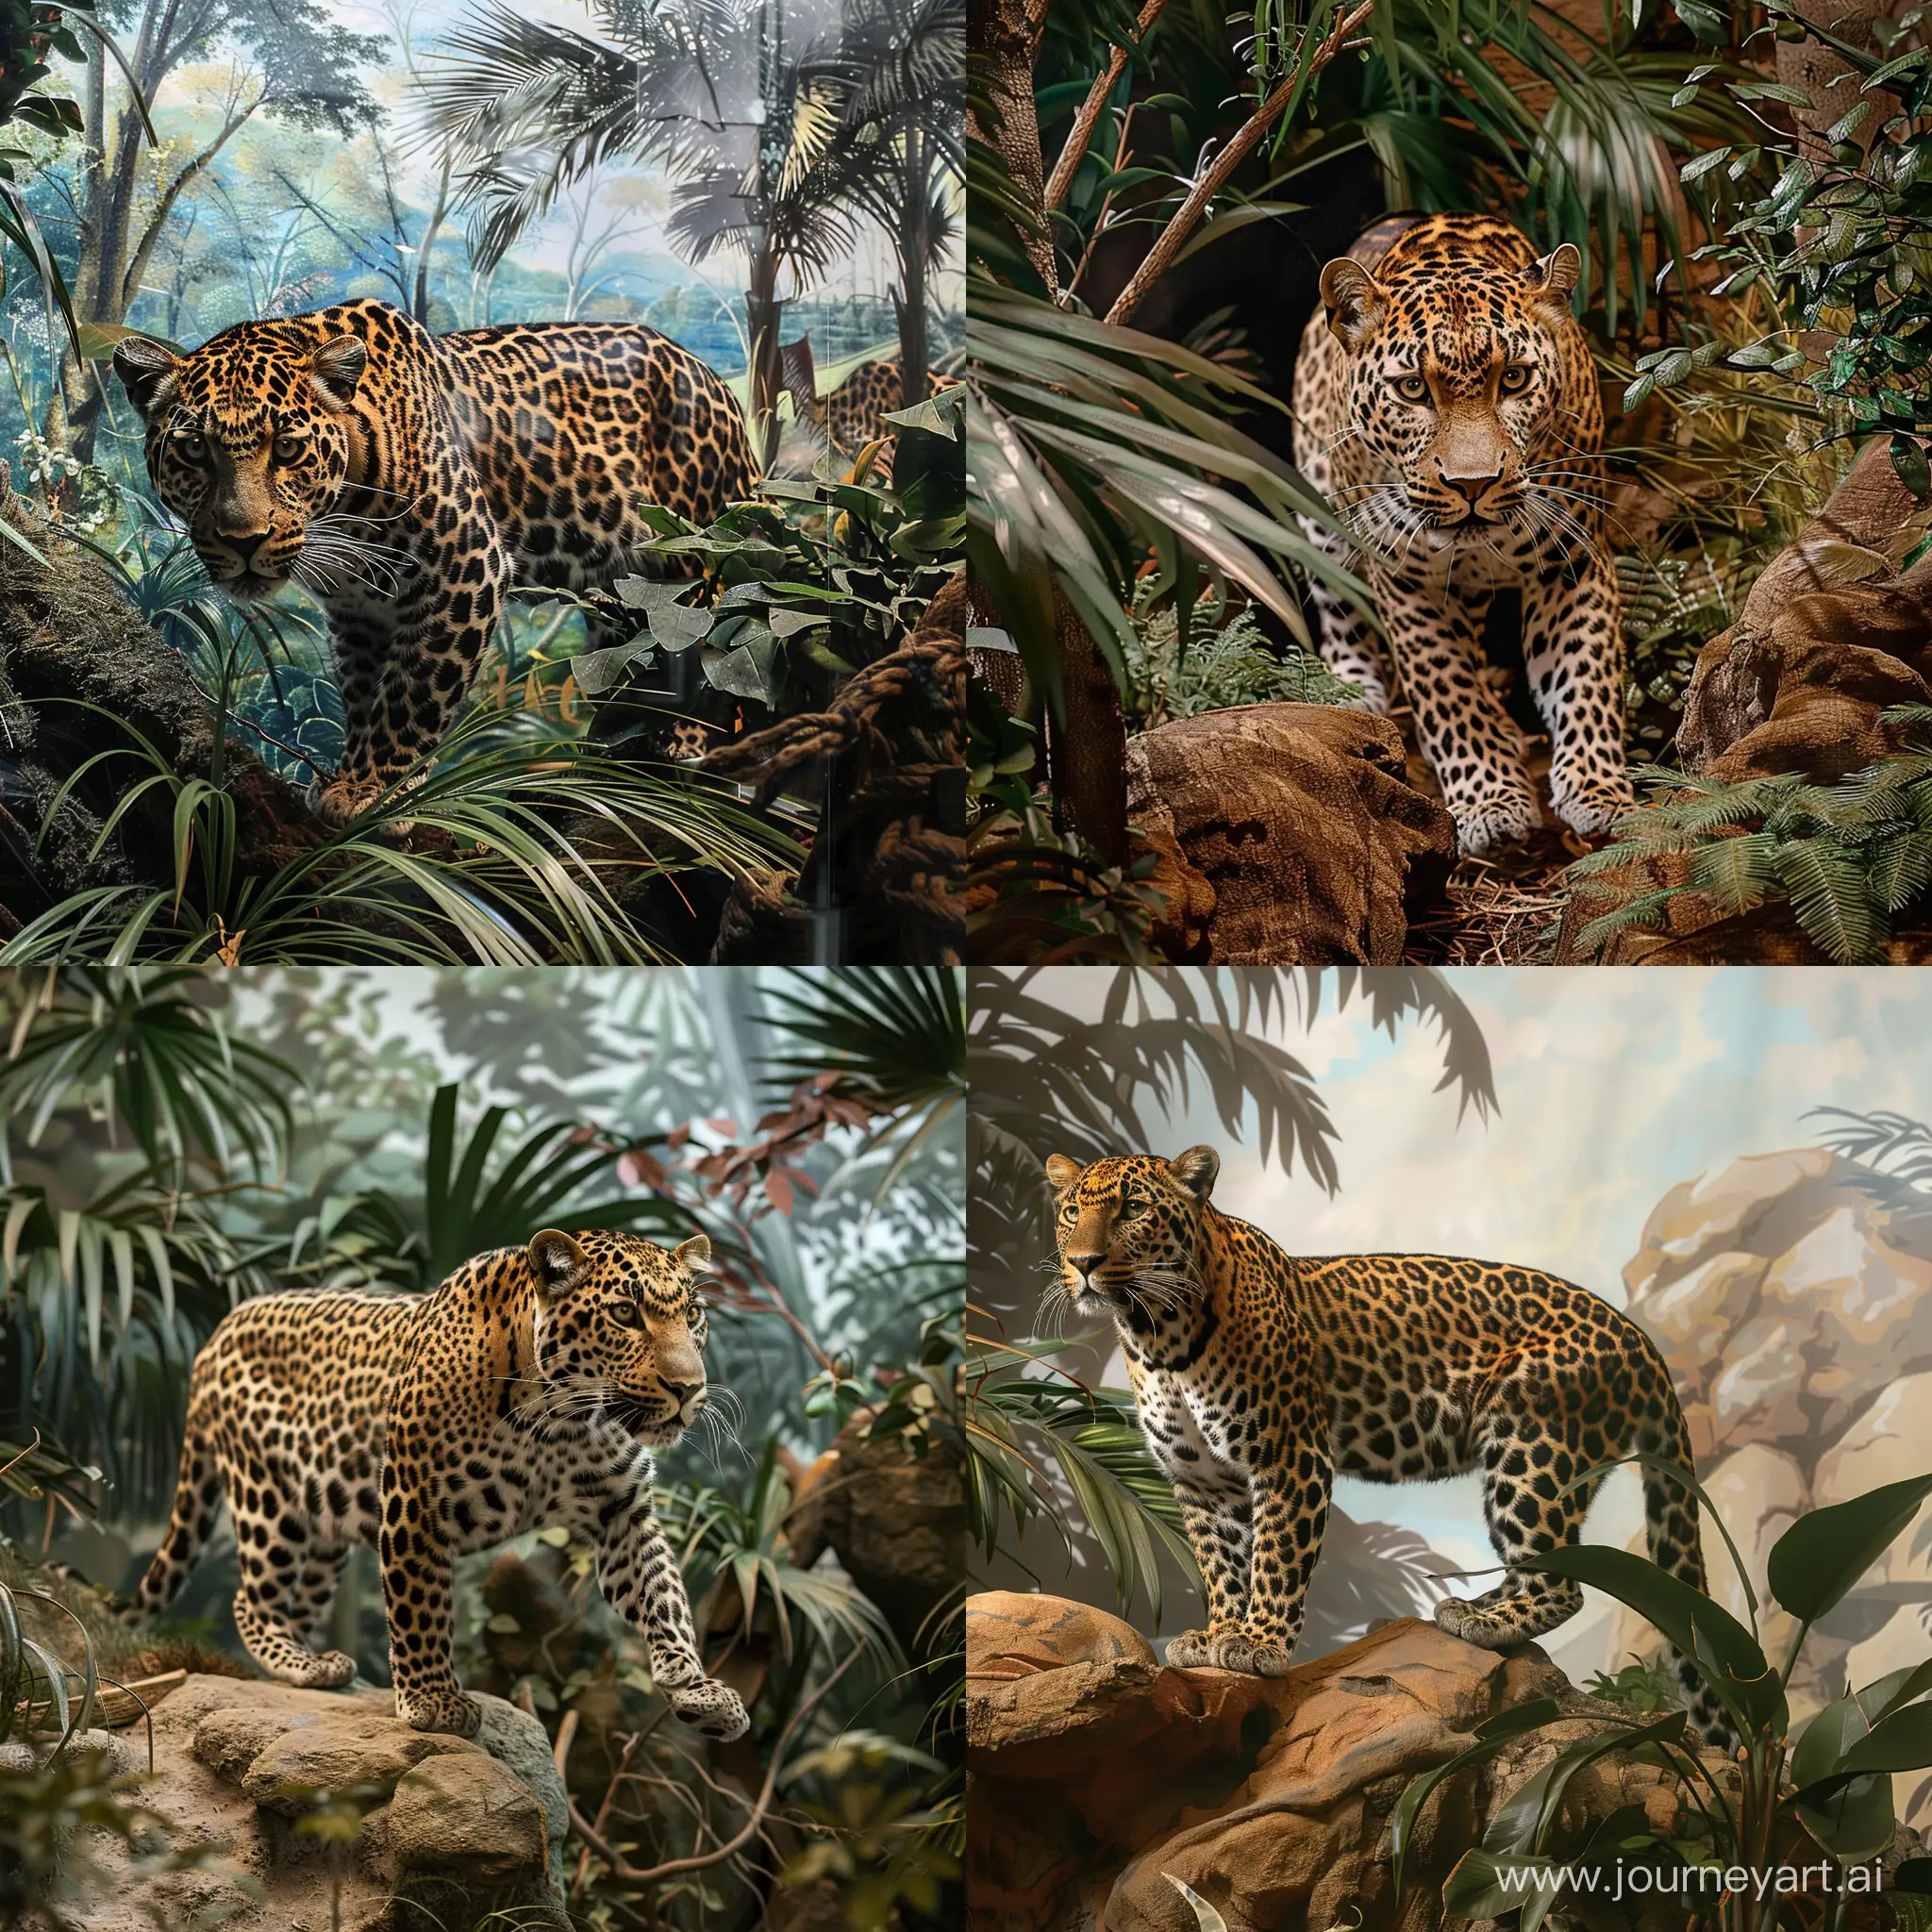 leopard habitat exhibit, full zoo, detailed, creative